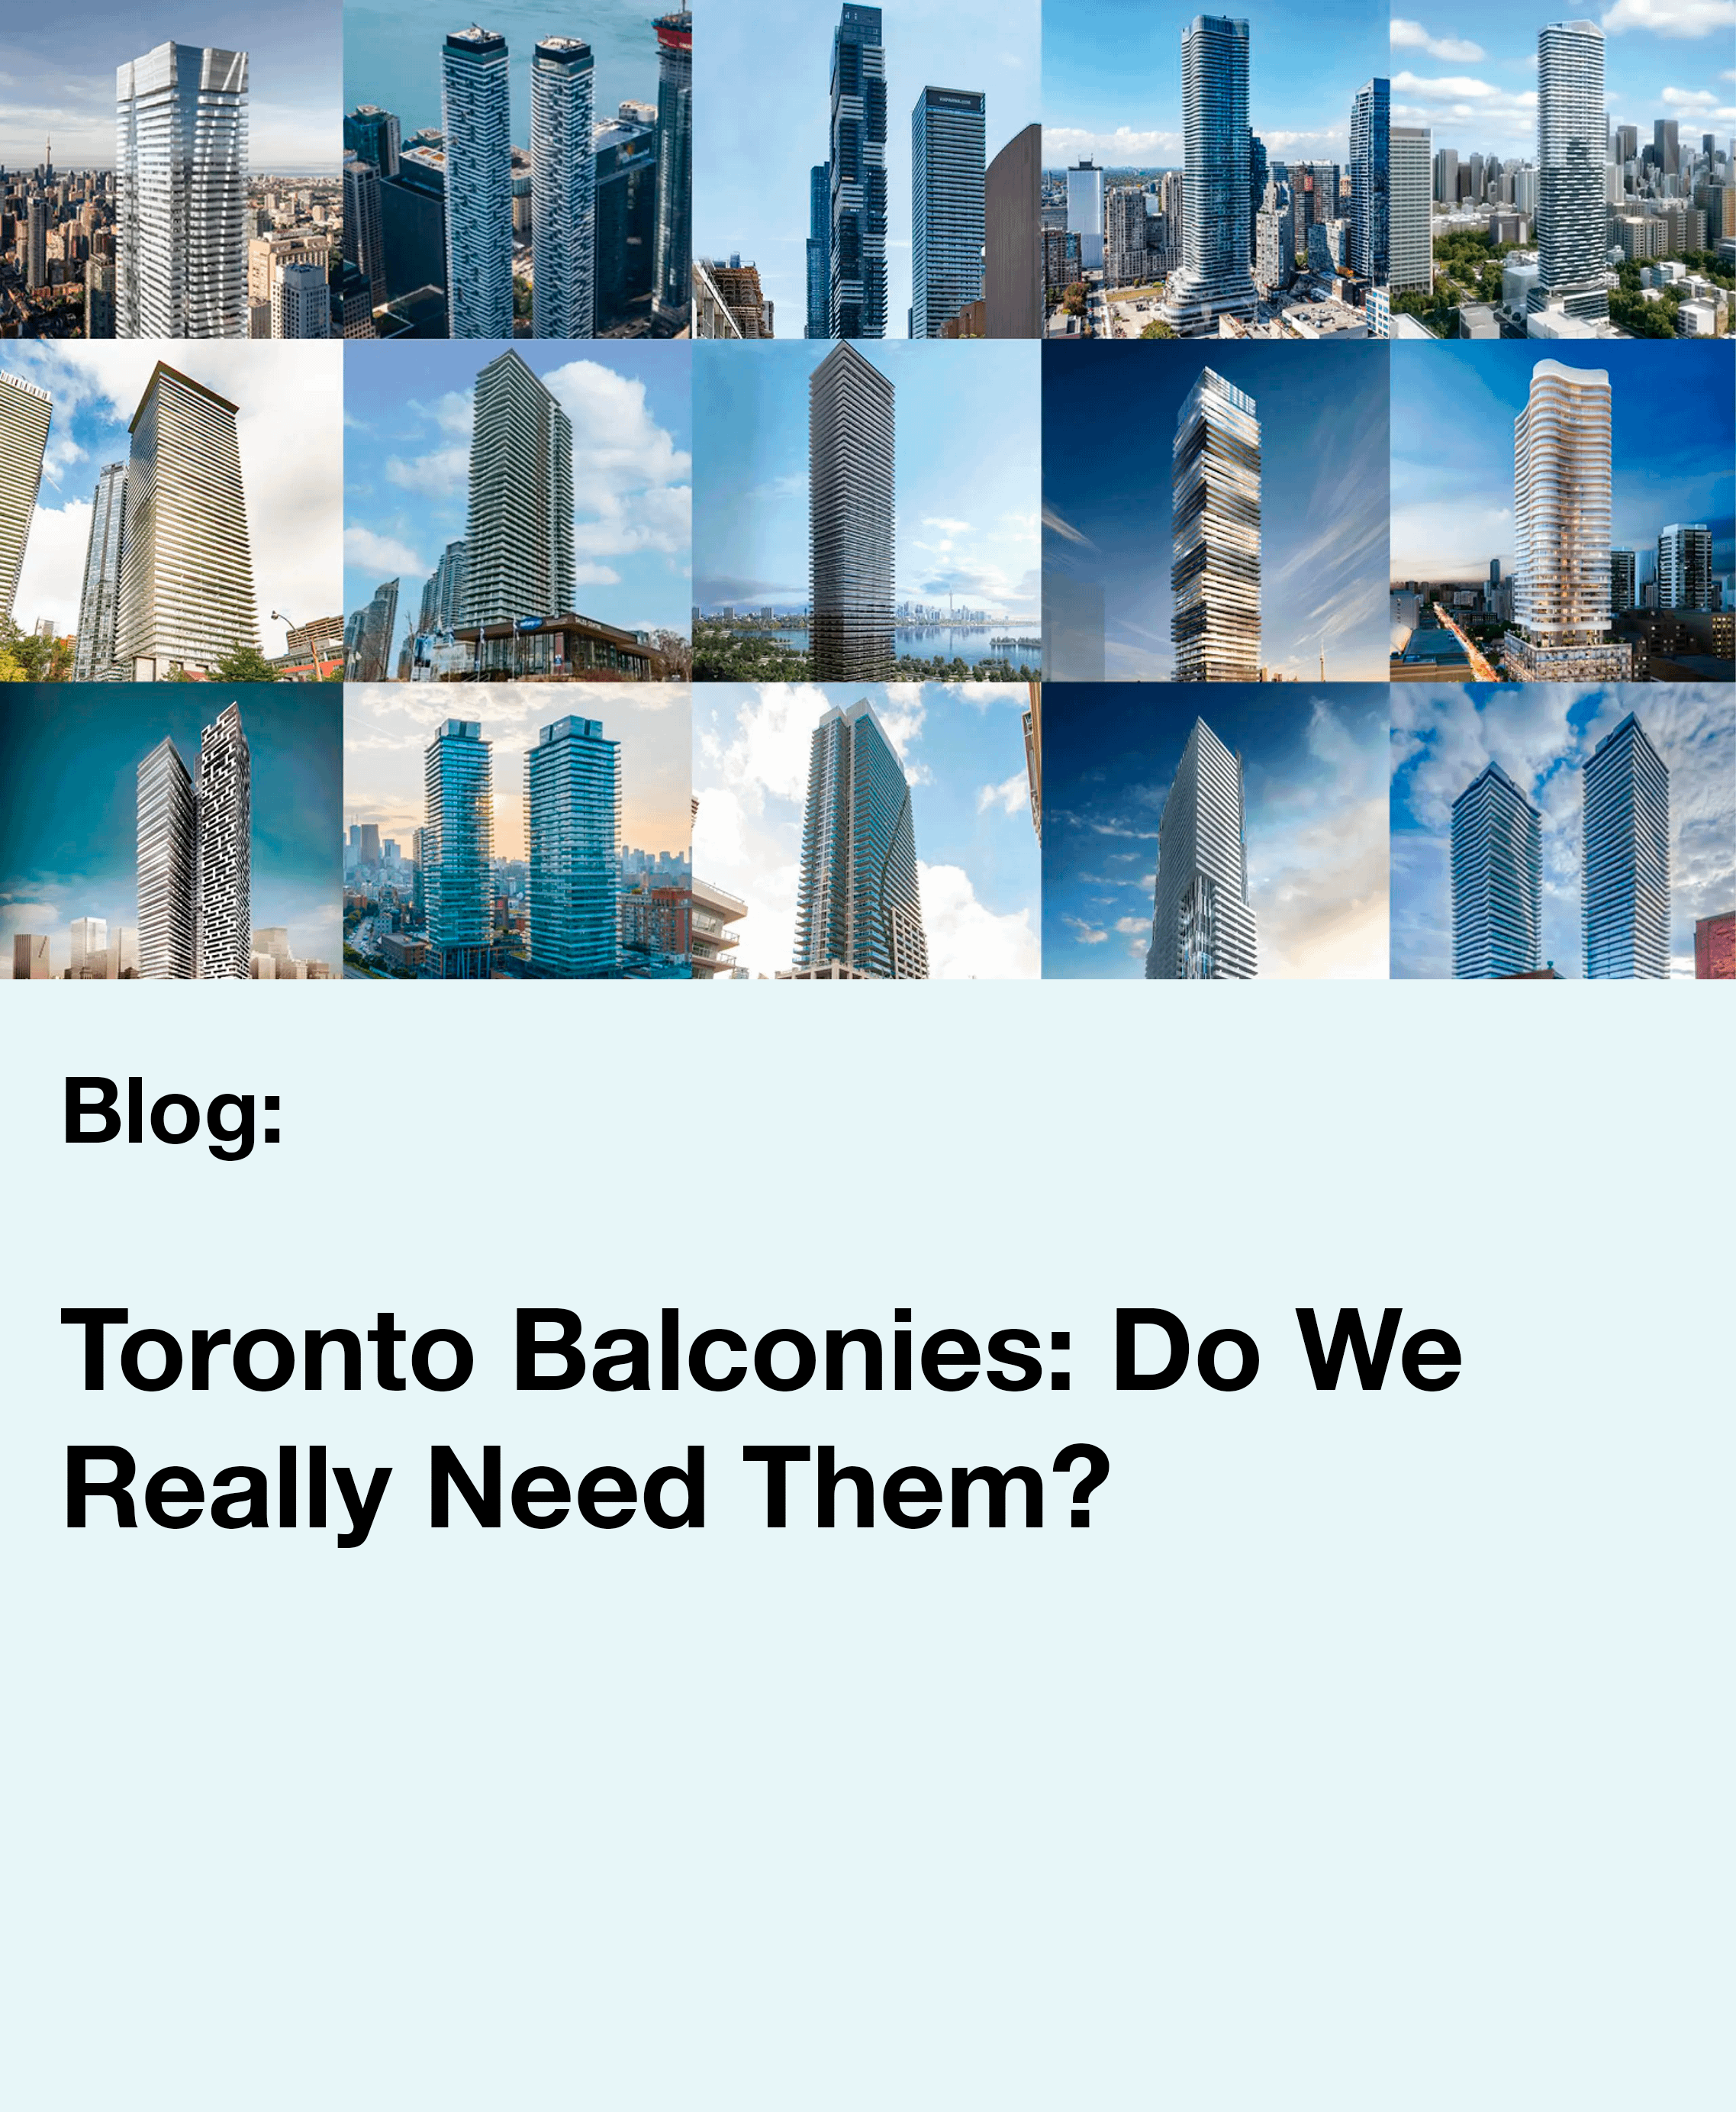 Toronto Balconies - Outside In